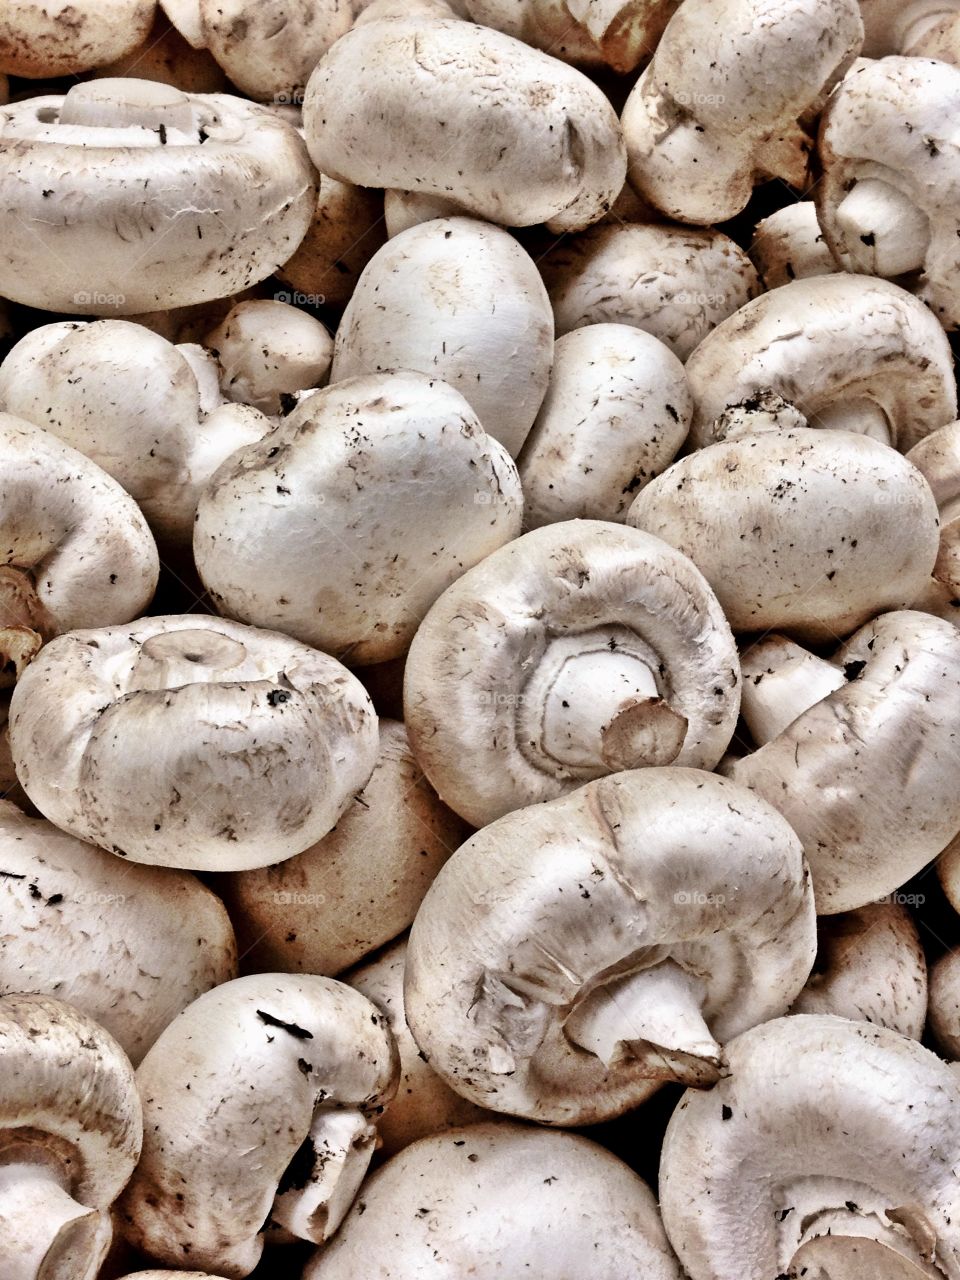 Mushroom Background. Full frame photo of fresh mushrooms